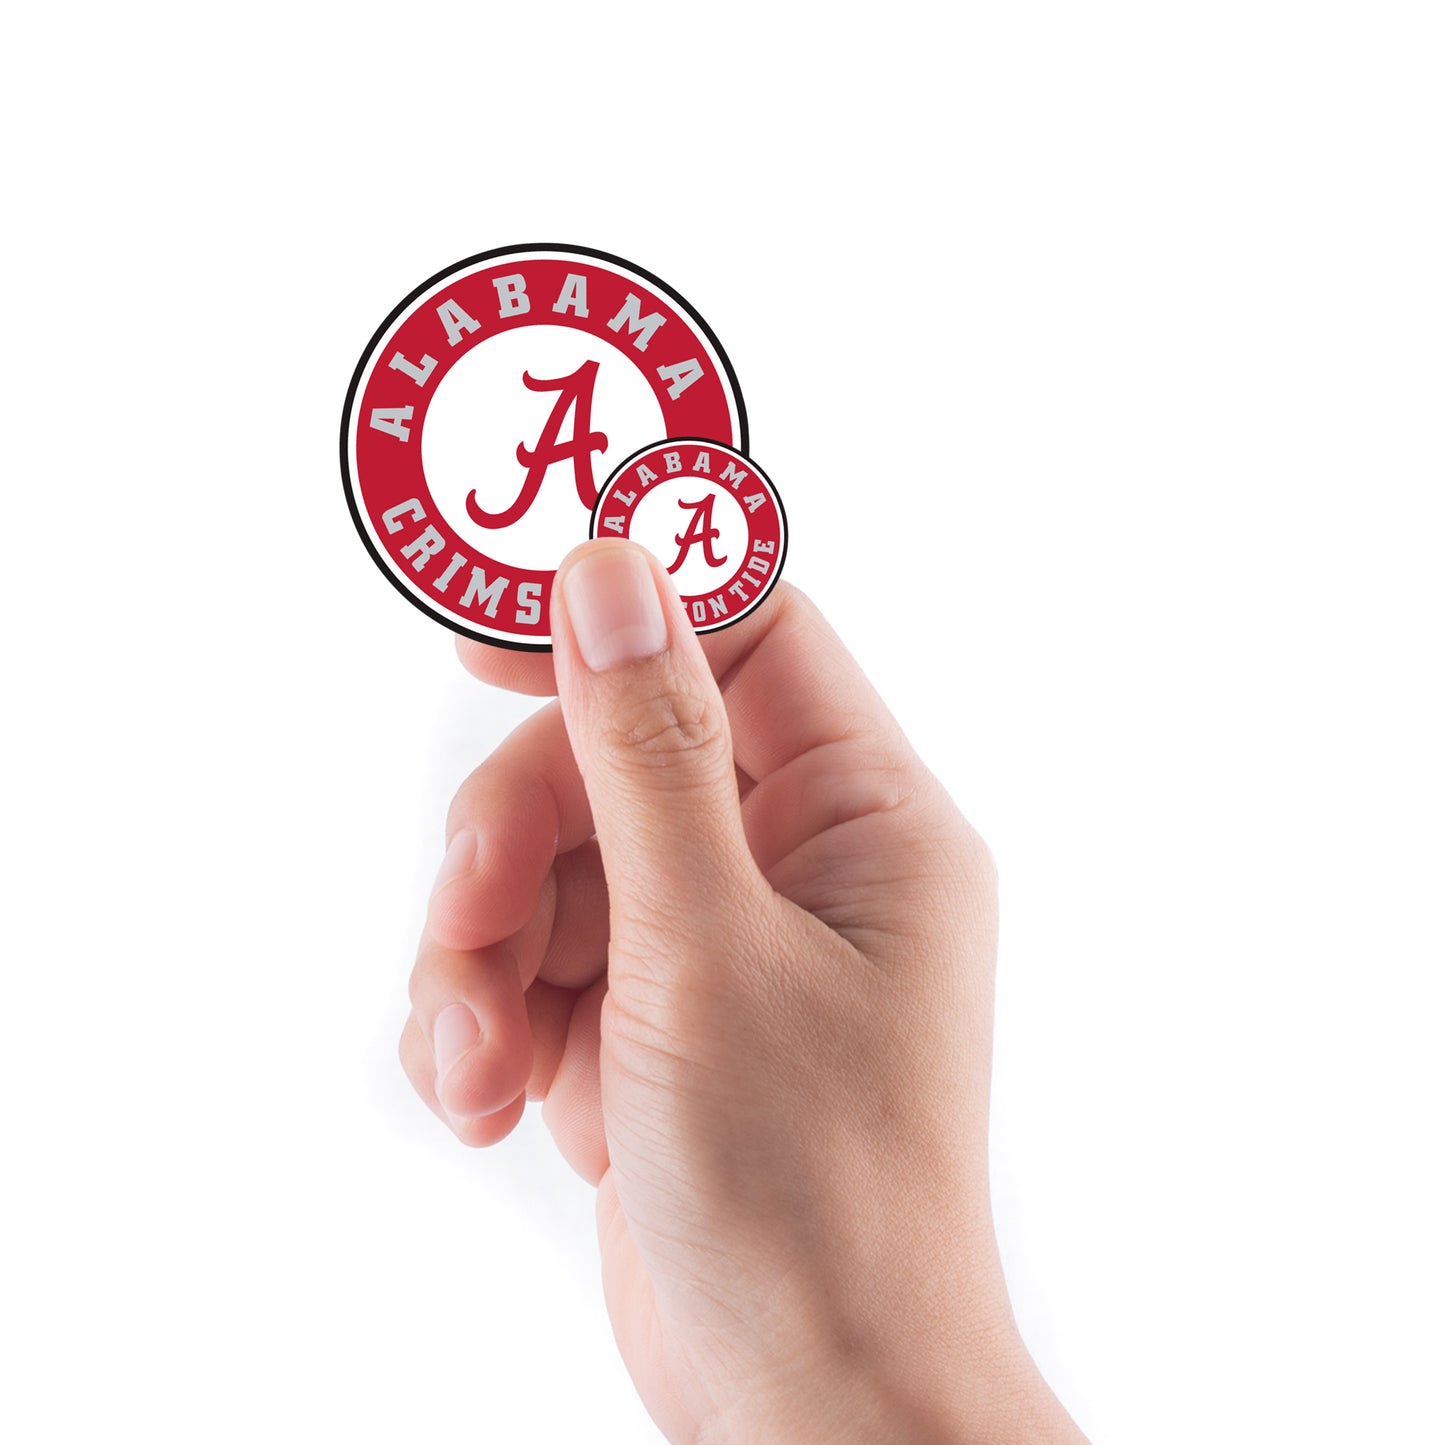 Sheet of 5 -U of Alabama: Alabama Crimson Tide  Logo Minis        - Officially Licensed NCAA Removable    Adhesive Decal